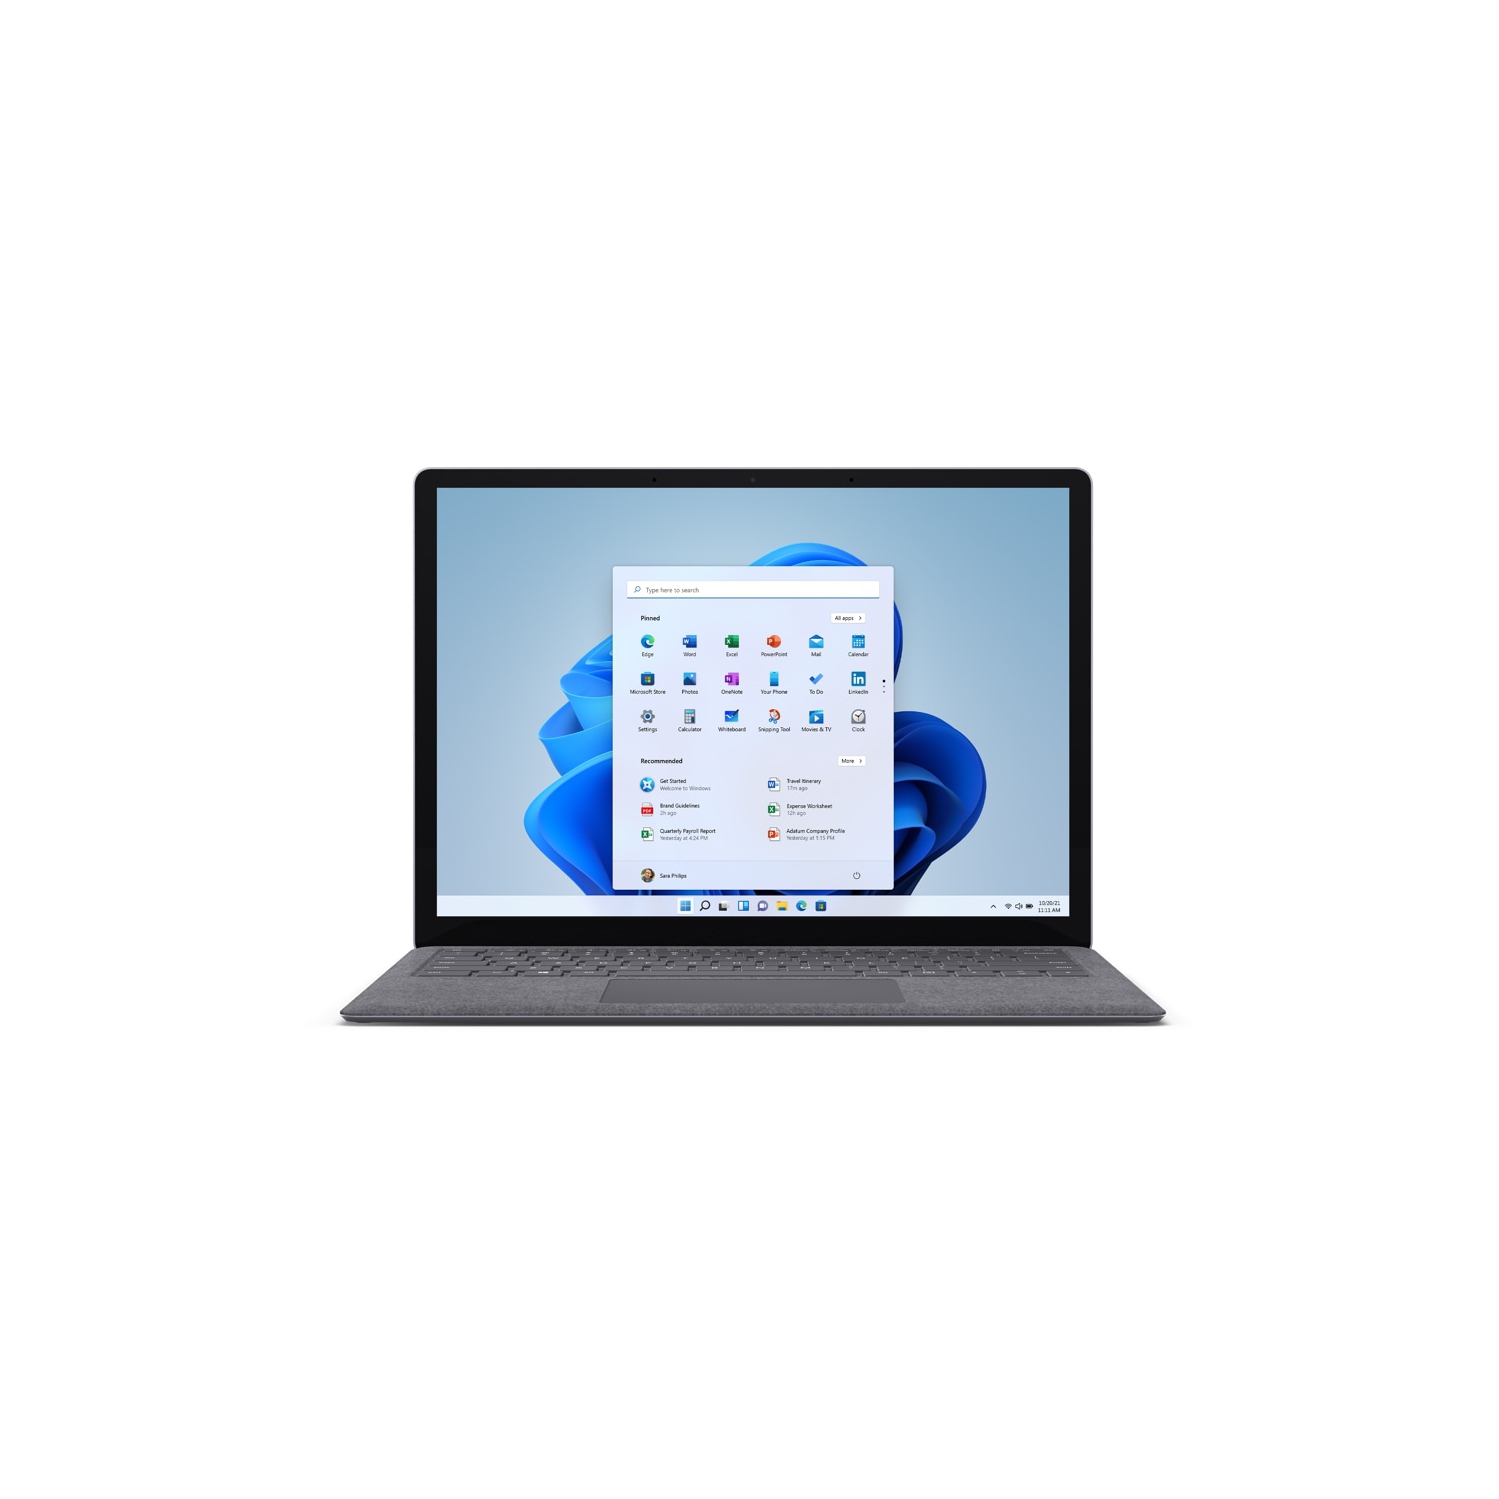 Refurbished (Excellent) Microsoft Surface Laptop 4 - Intel Core i5-1135G7/8GB LPDDR4x/512GB SSD/Windows 11 Home/ 13.5" Screen - Platinum